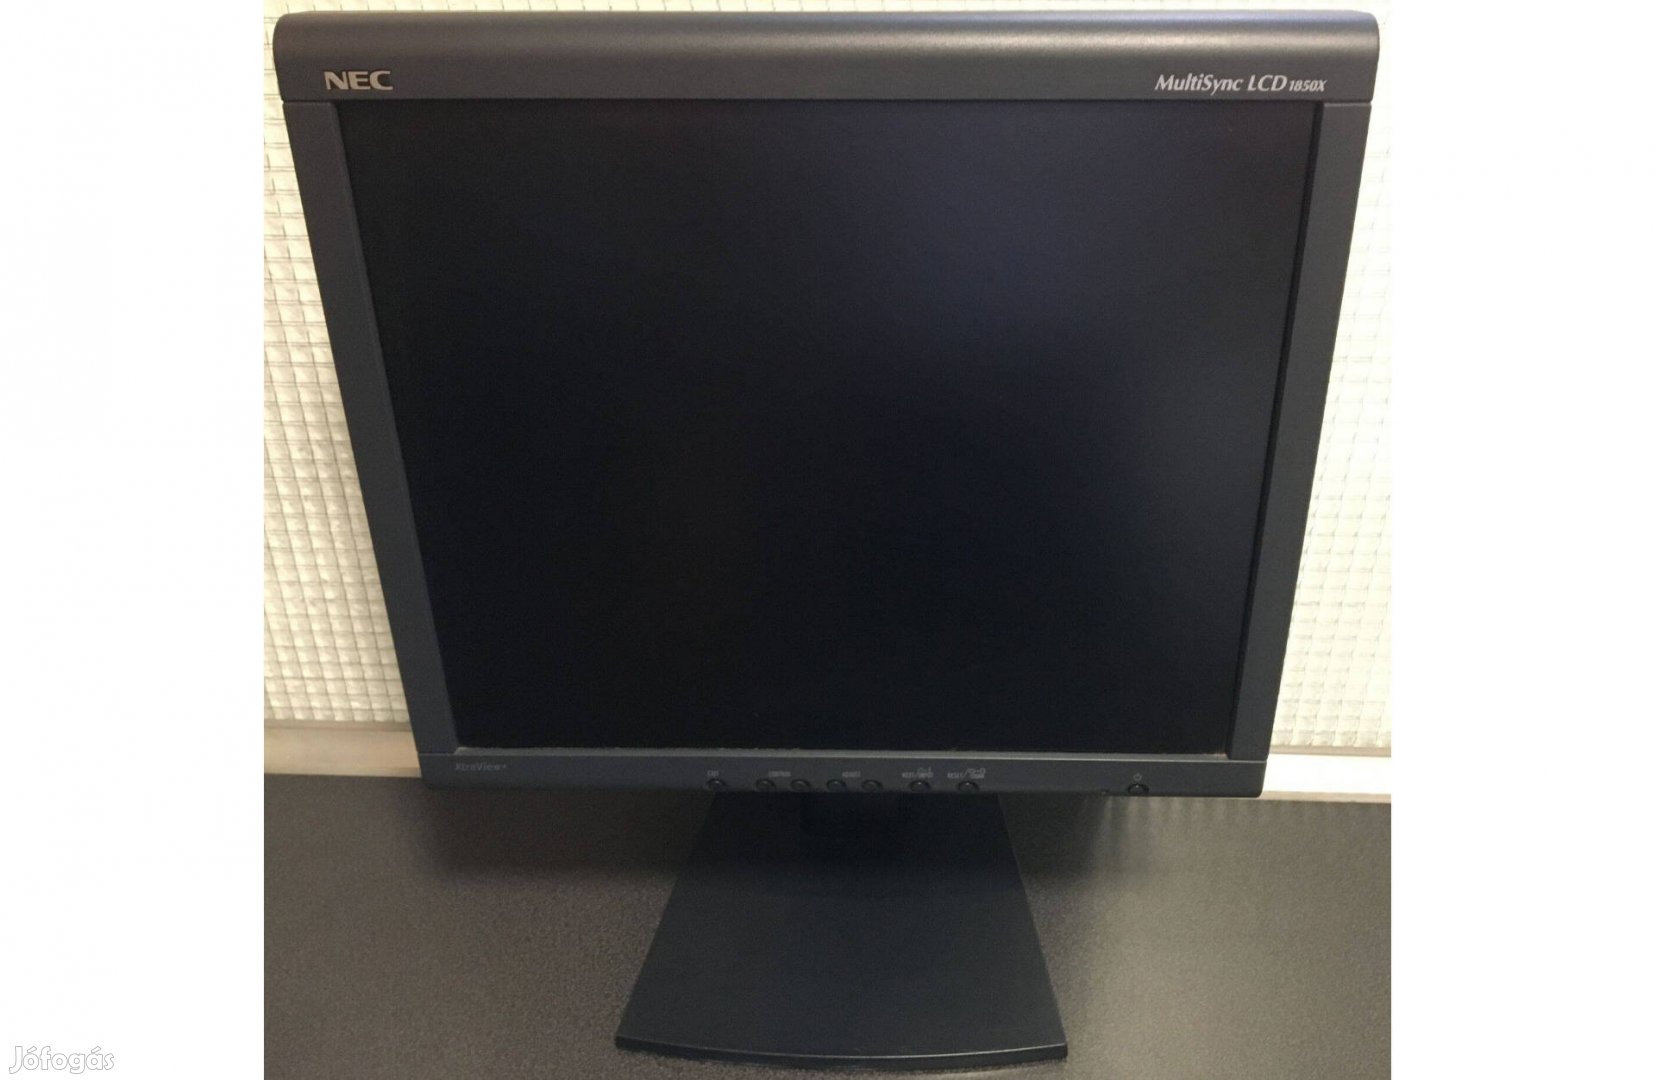 NEC Multisync LCD 1850X monitor eladó